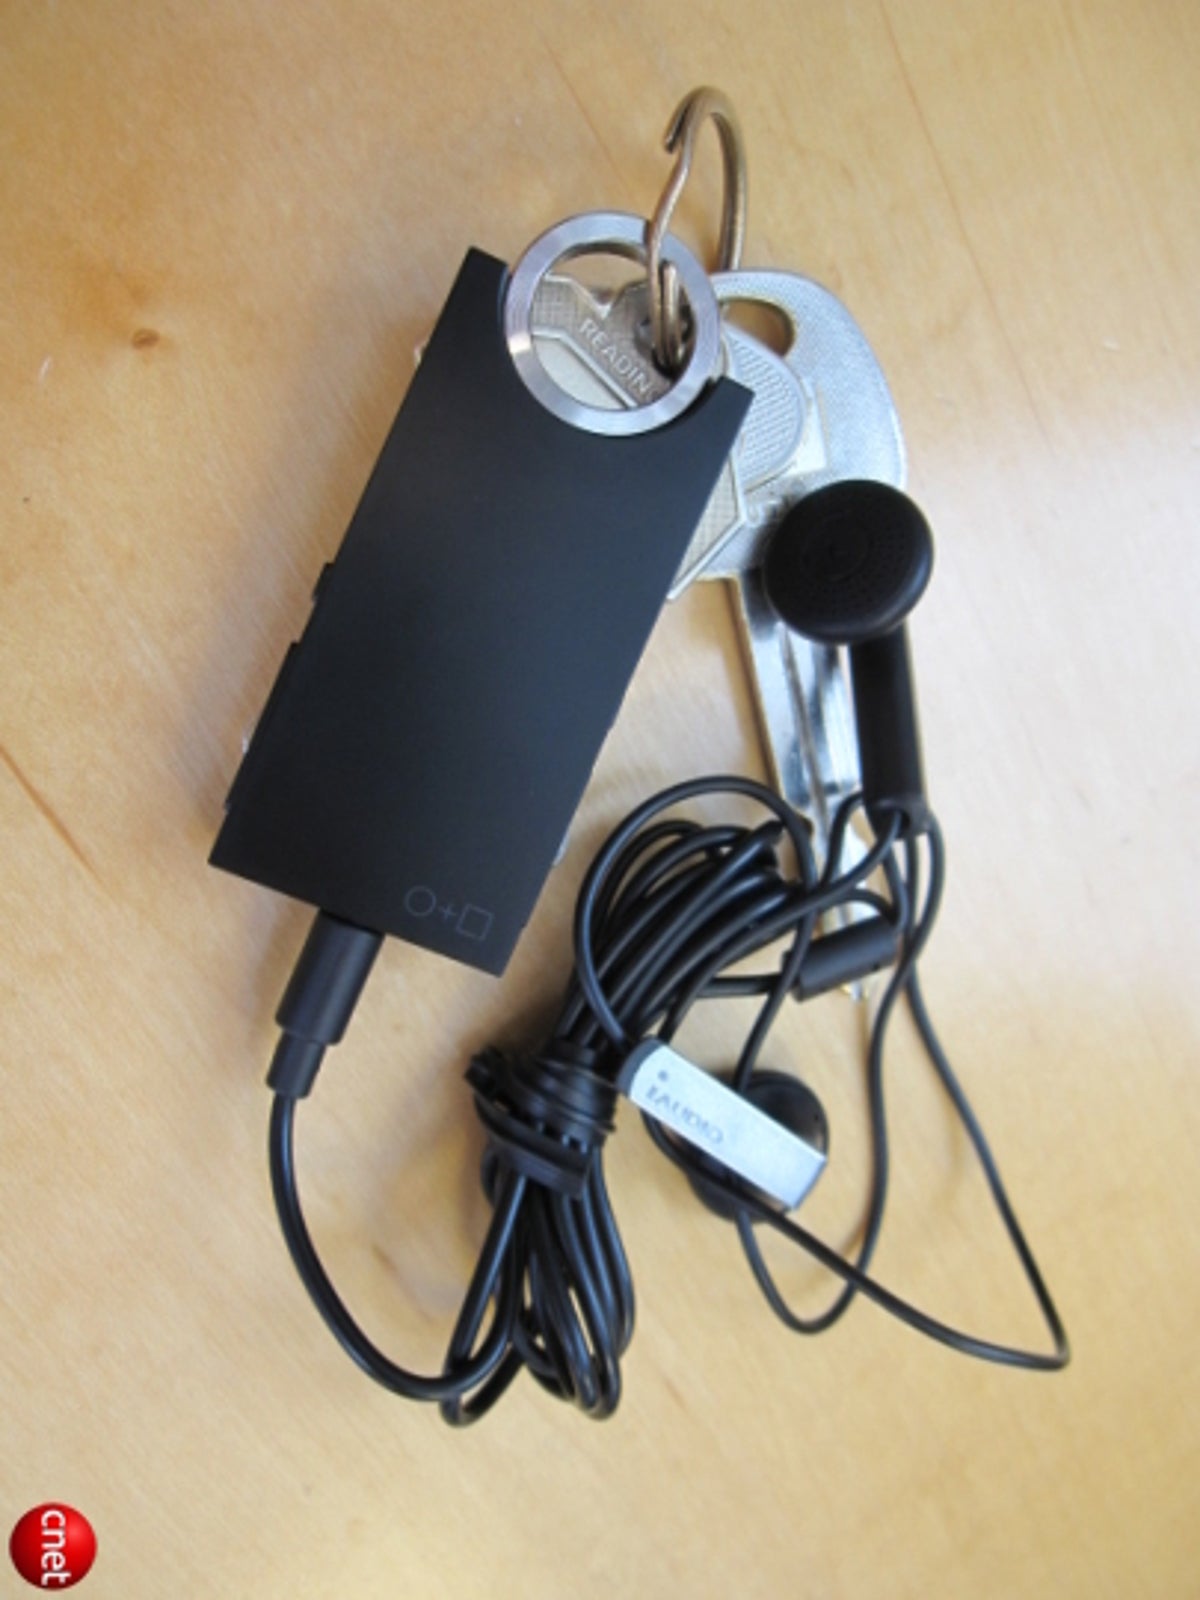 Photo of the Cowon iAudio E2 MP3 player.